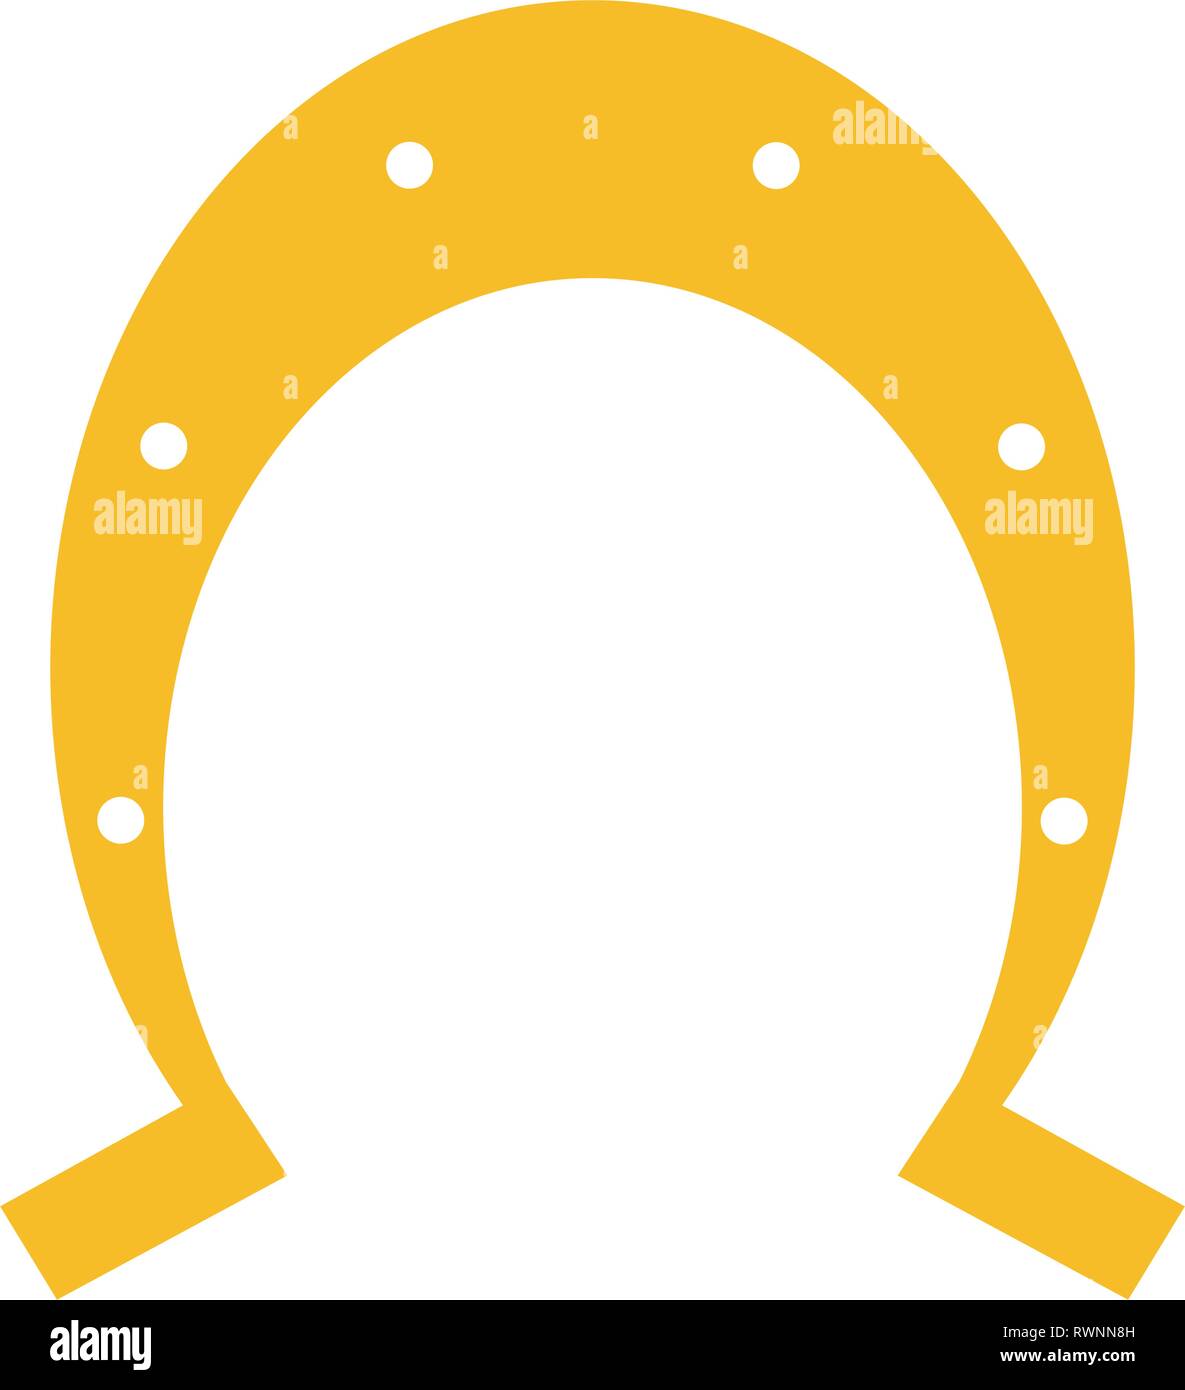 St patricks horseshoe symbol Stock Vector